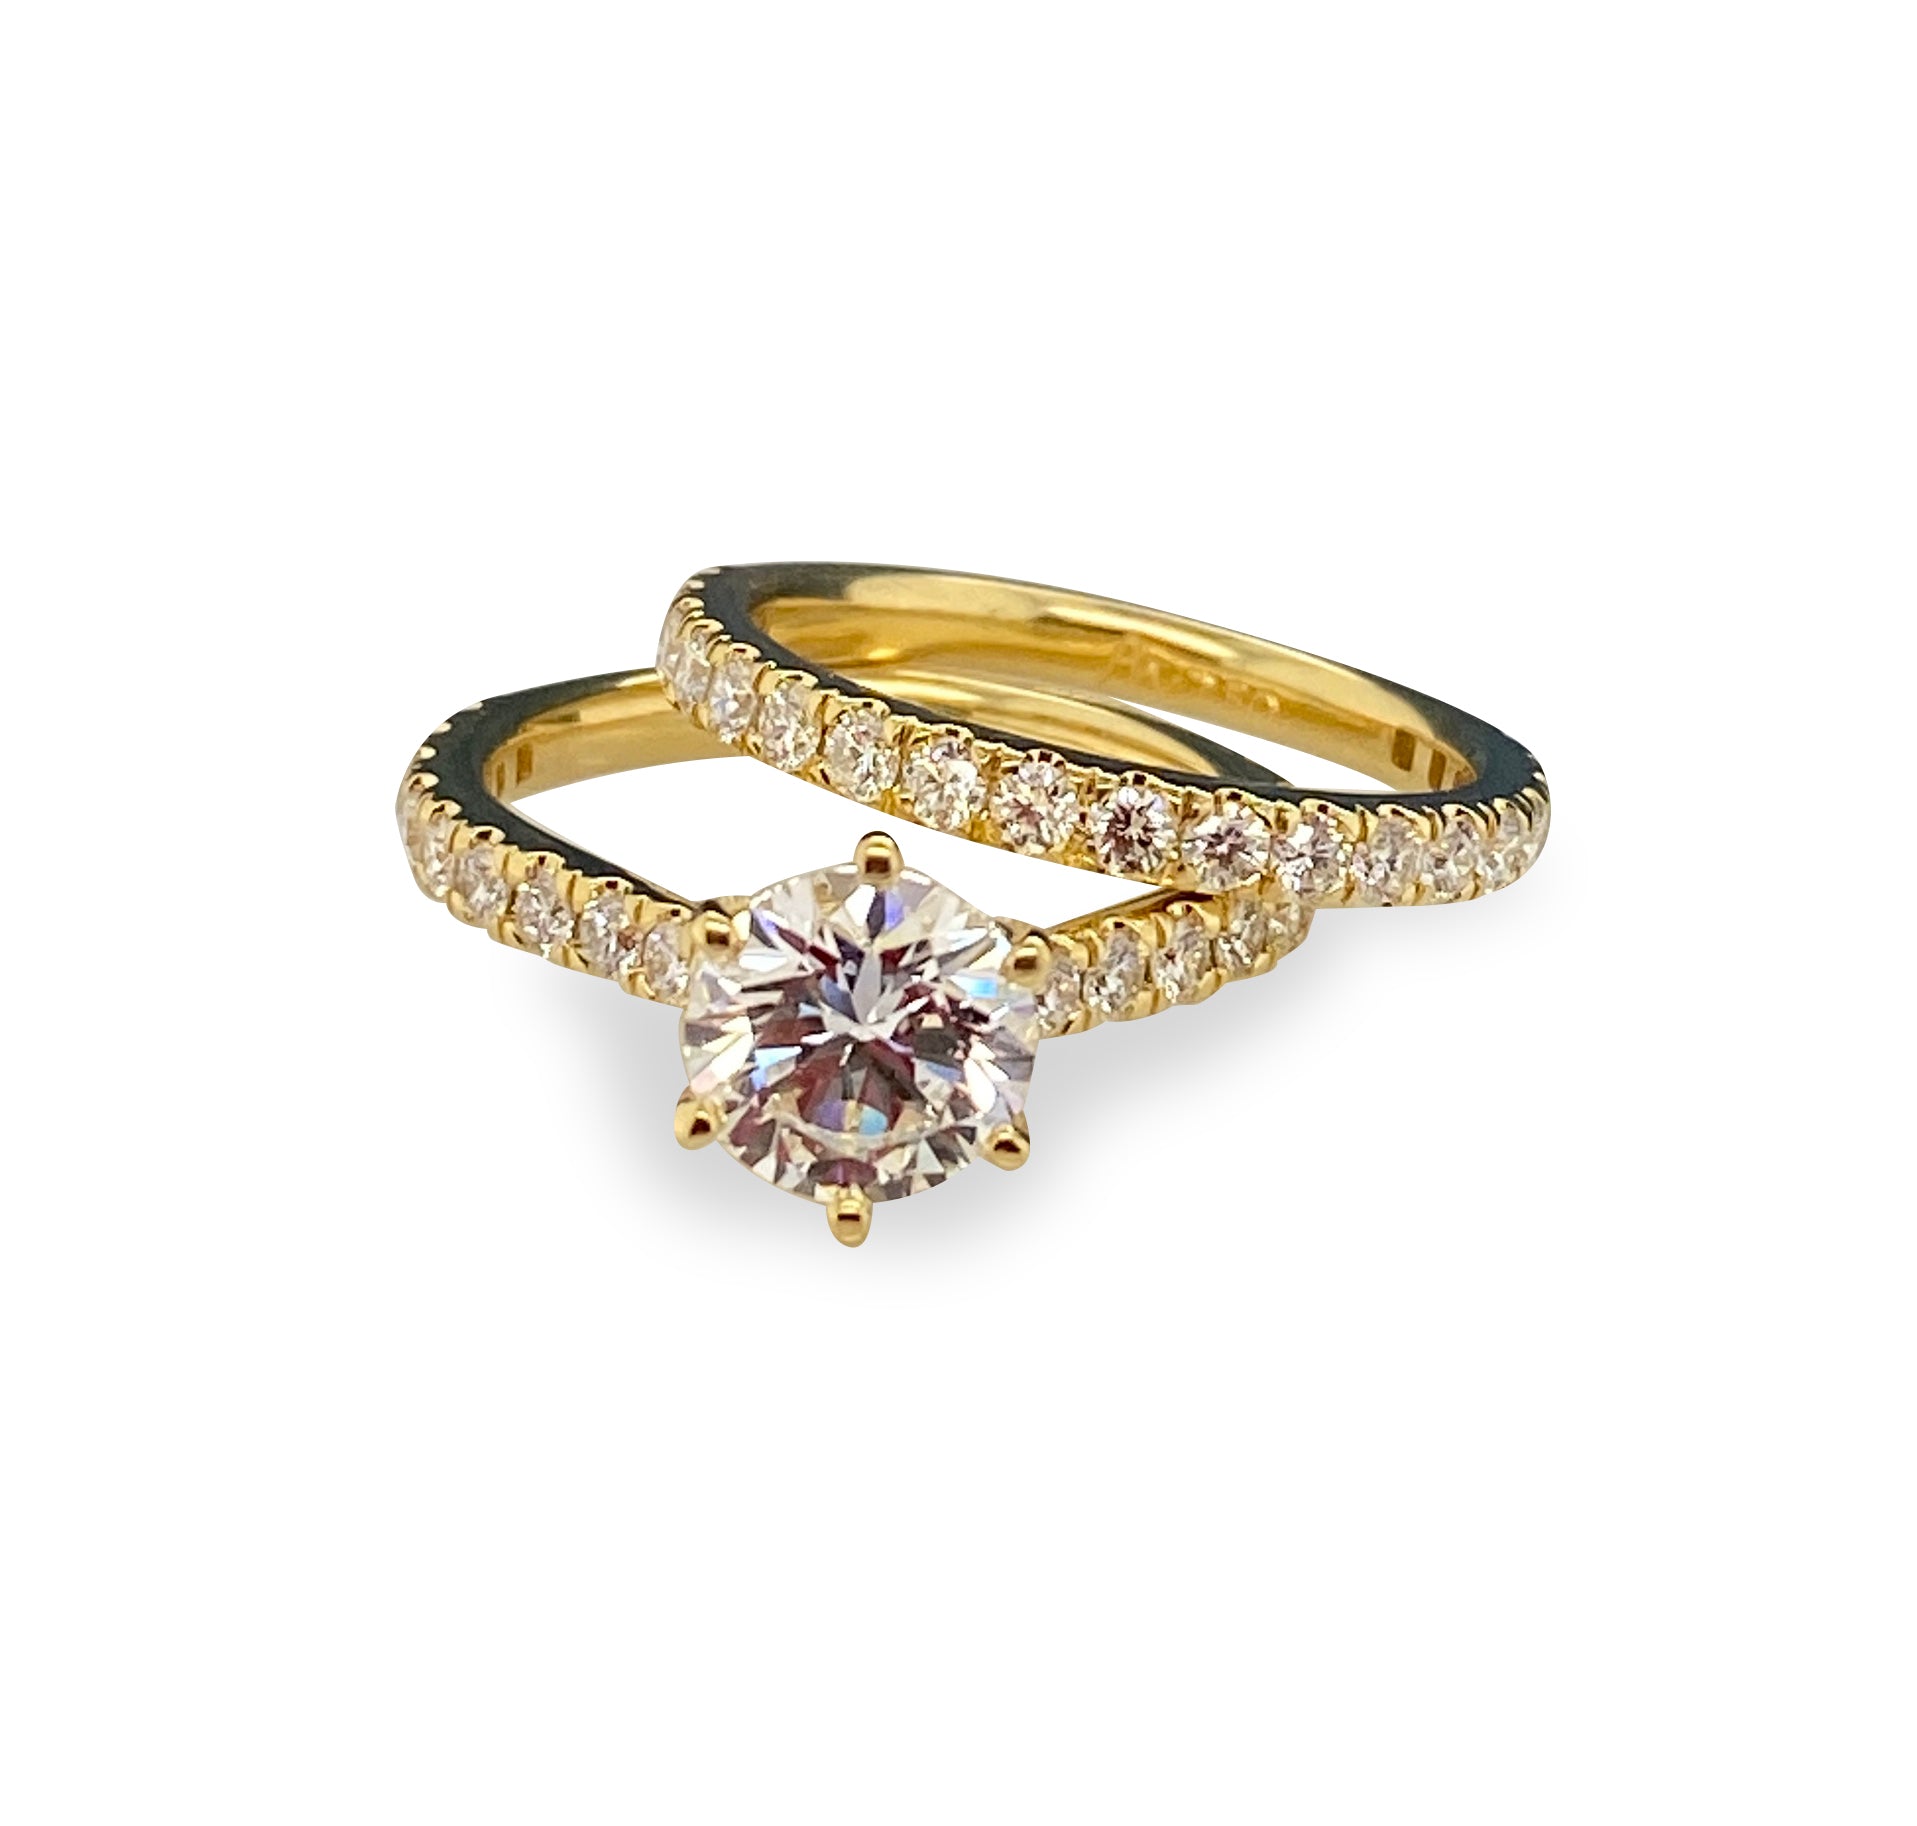 Brilliant Cut Diamond Engagement Ring Set